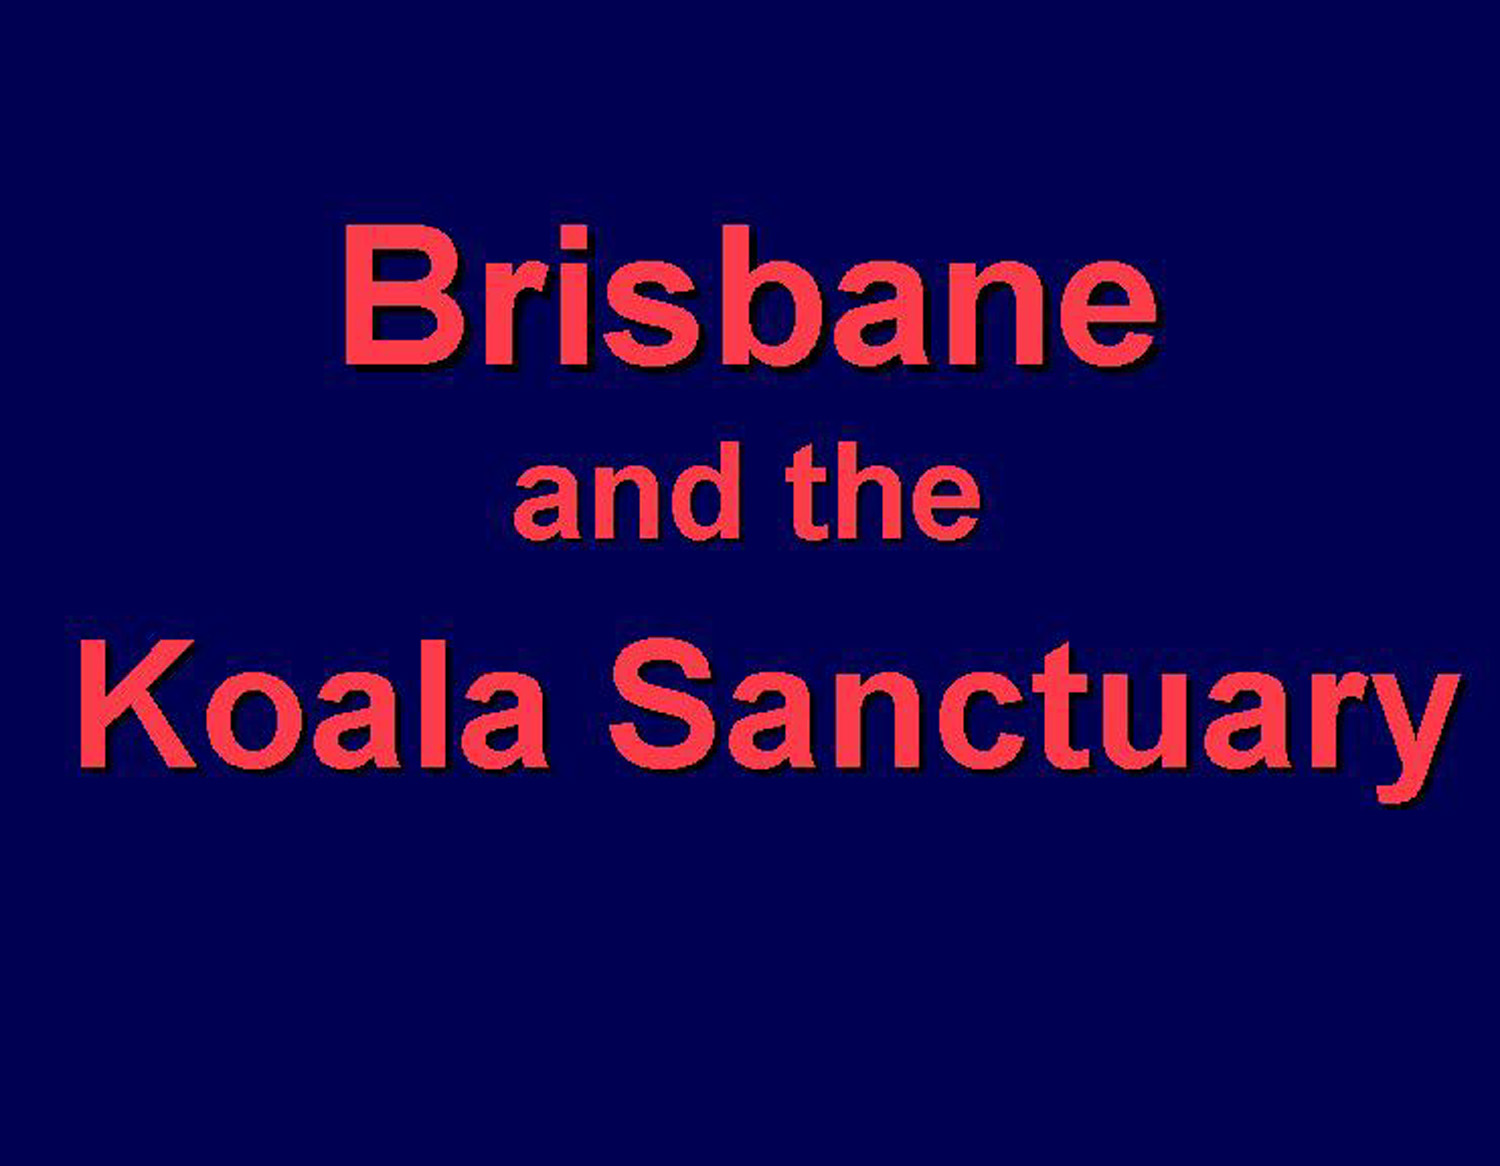 Eclipse 2012 - A24 - Title - Brisbane and Koala